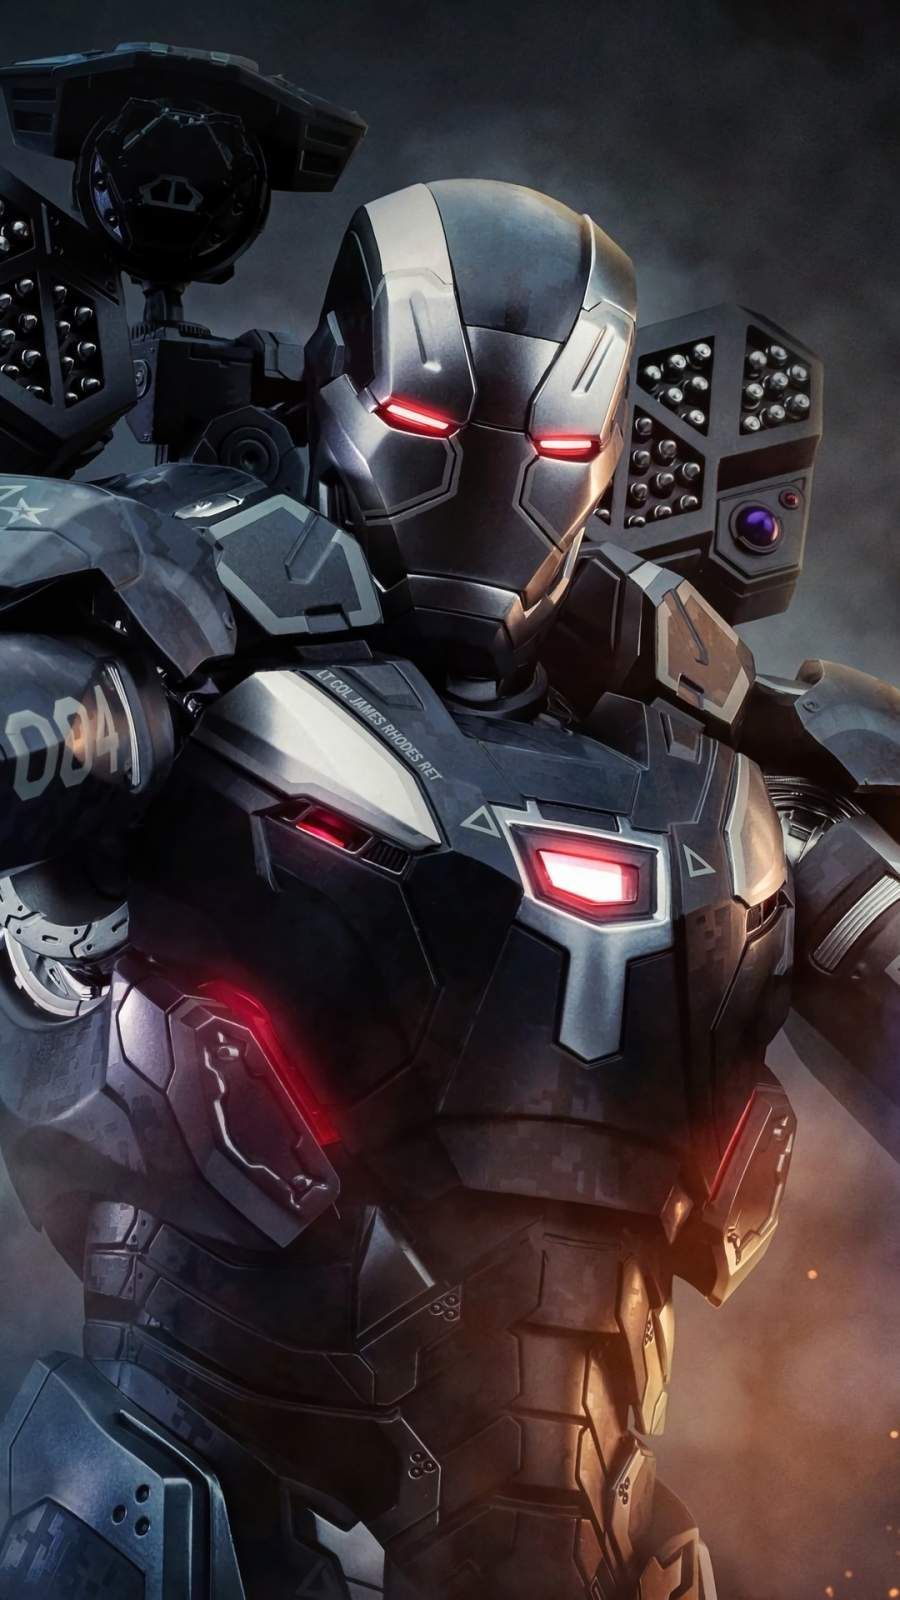 War Machine 4k iPhone Wallpaper. Iron man avengers, Marvel superhero posters, Marvel comics wallpaper